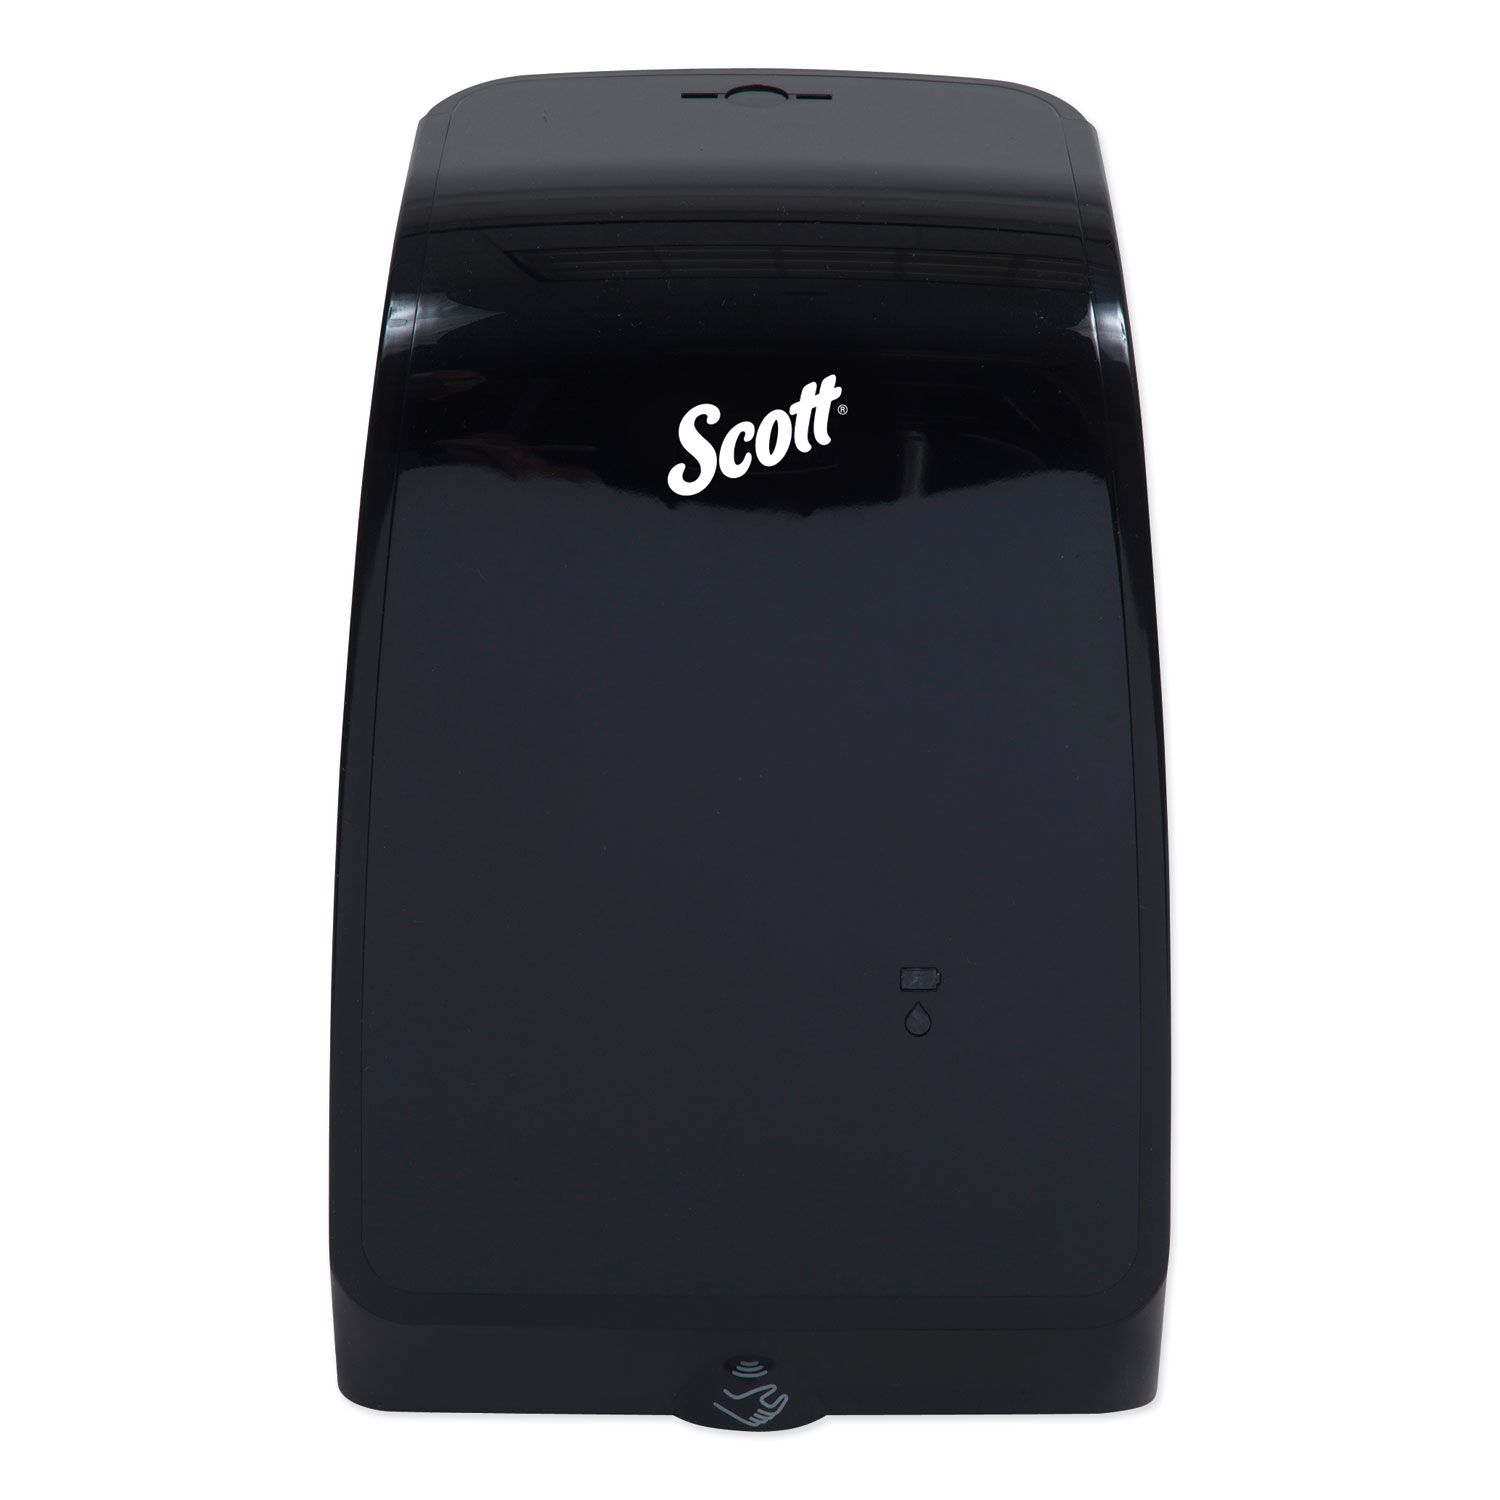  Scott 32504 Electronic Skin Care Dispenser, 1200 mL, 7.3 x 4 x 11.7, Black (KCC32504) 